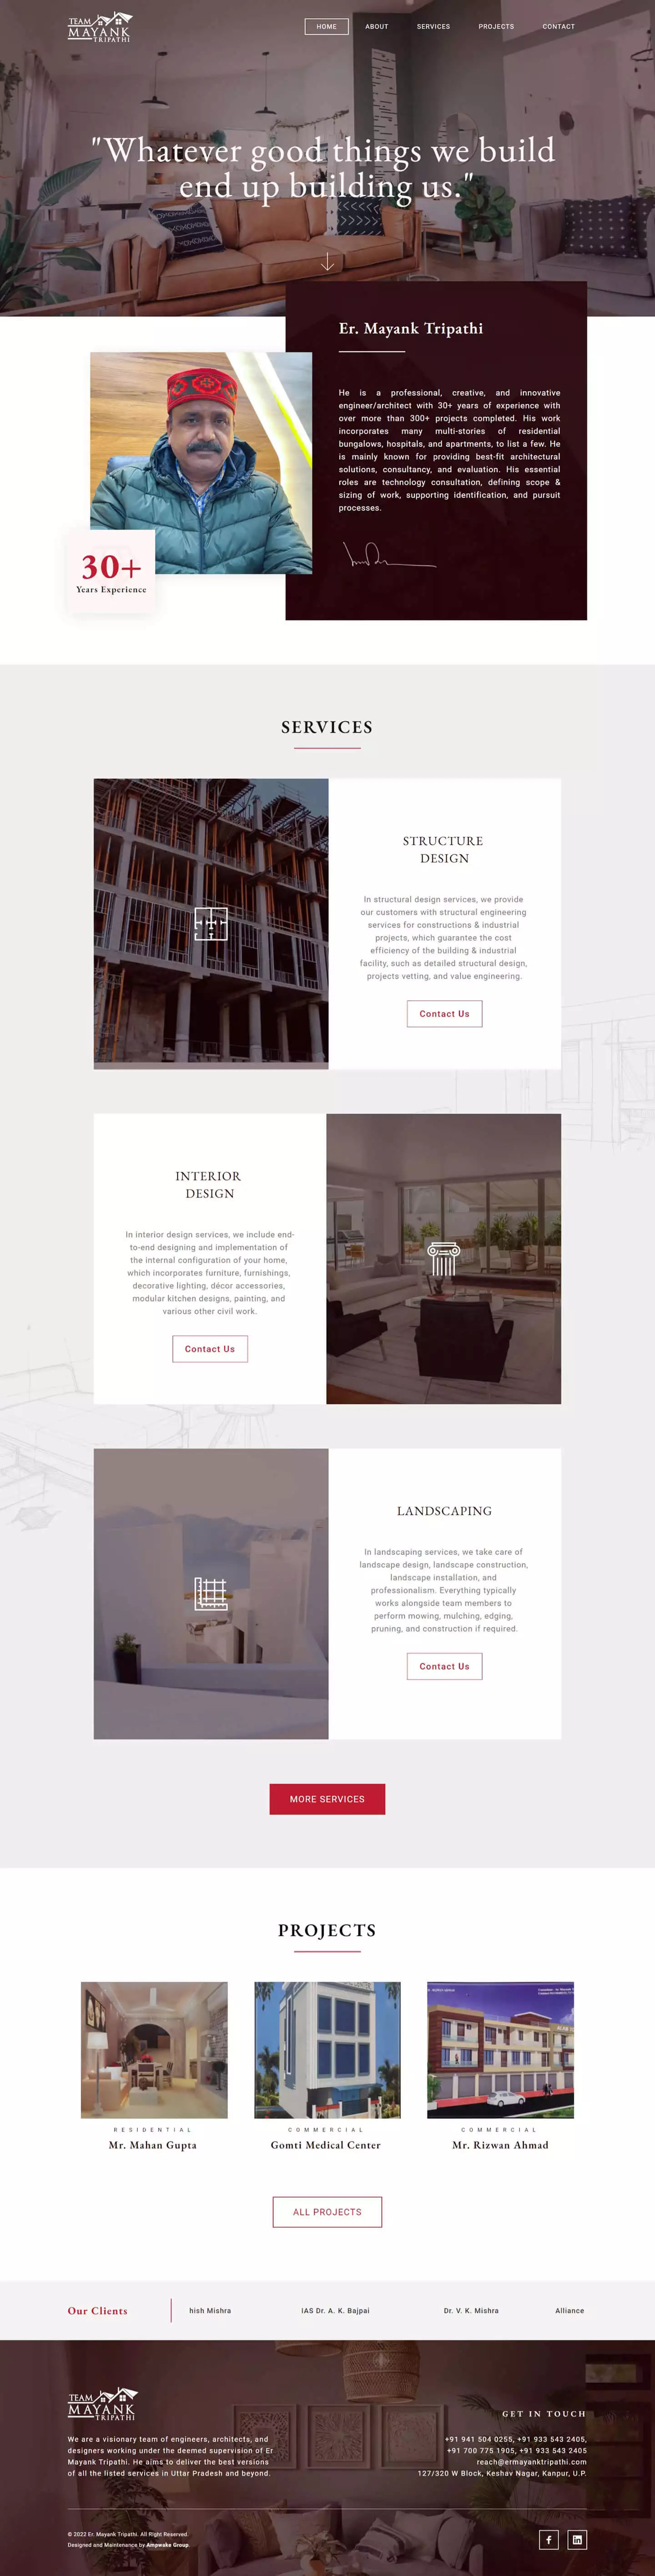 mayank tripathi website design by ampwake group